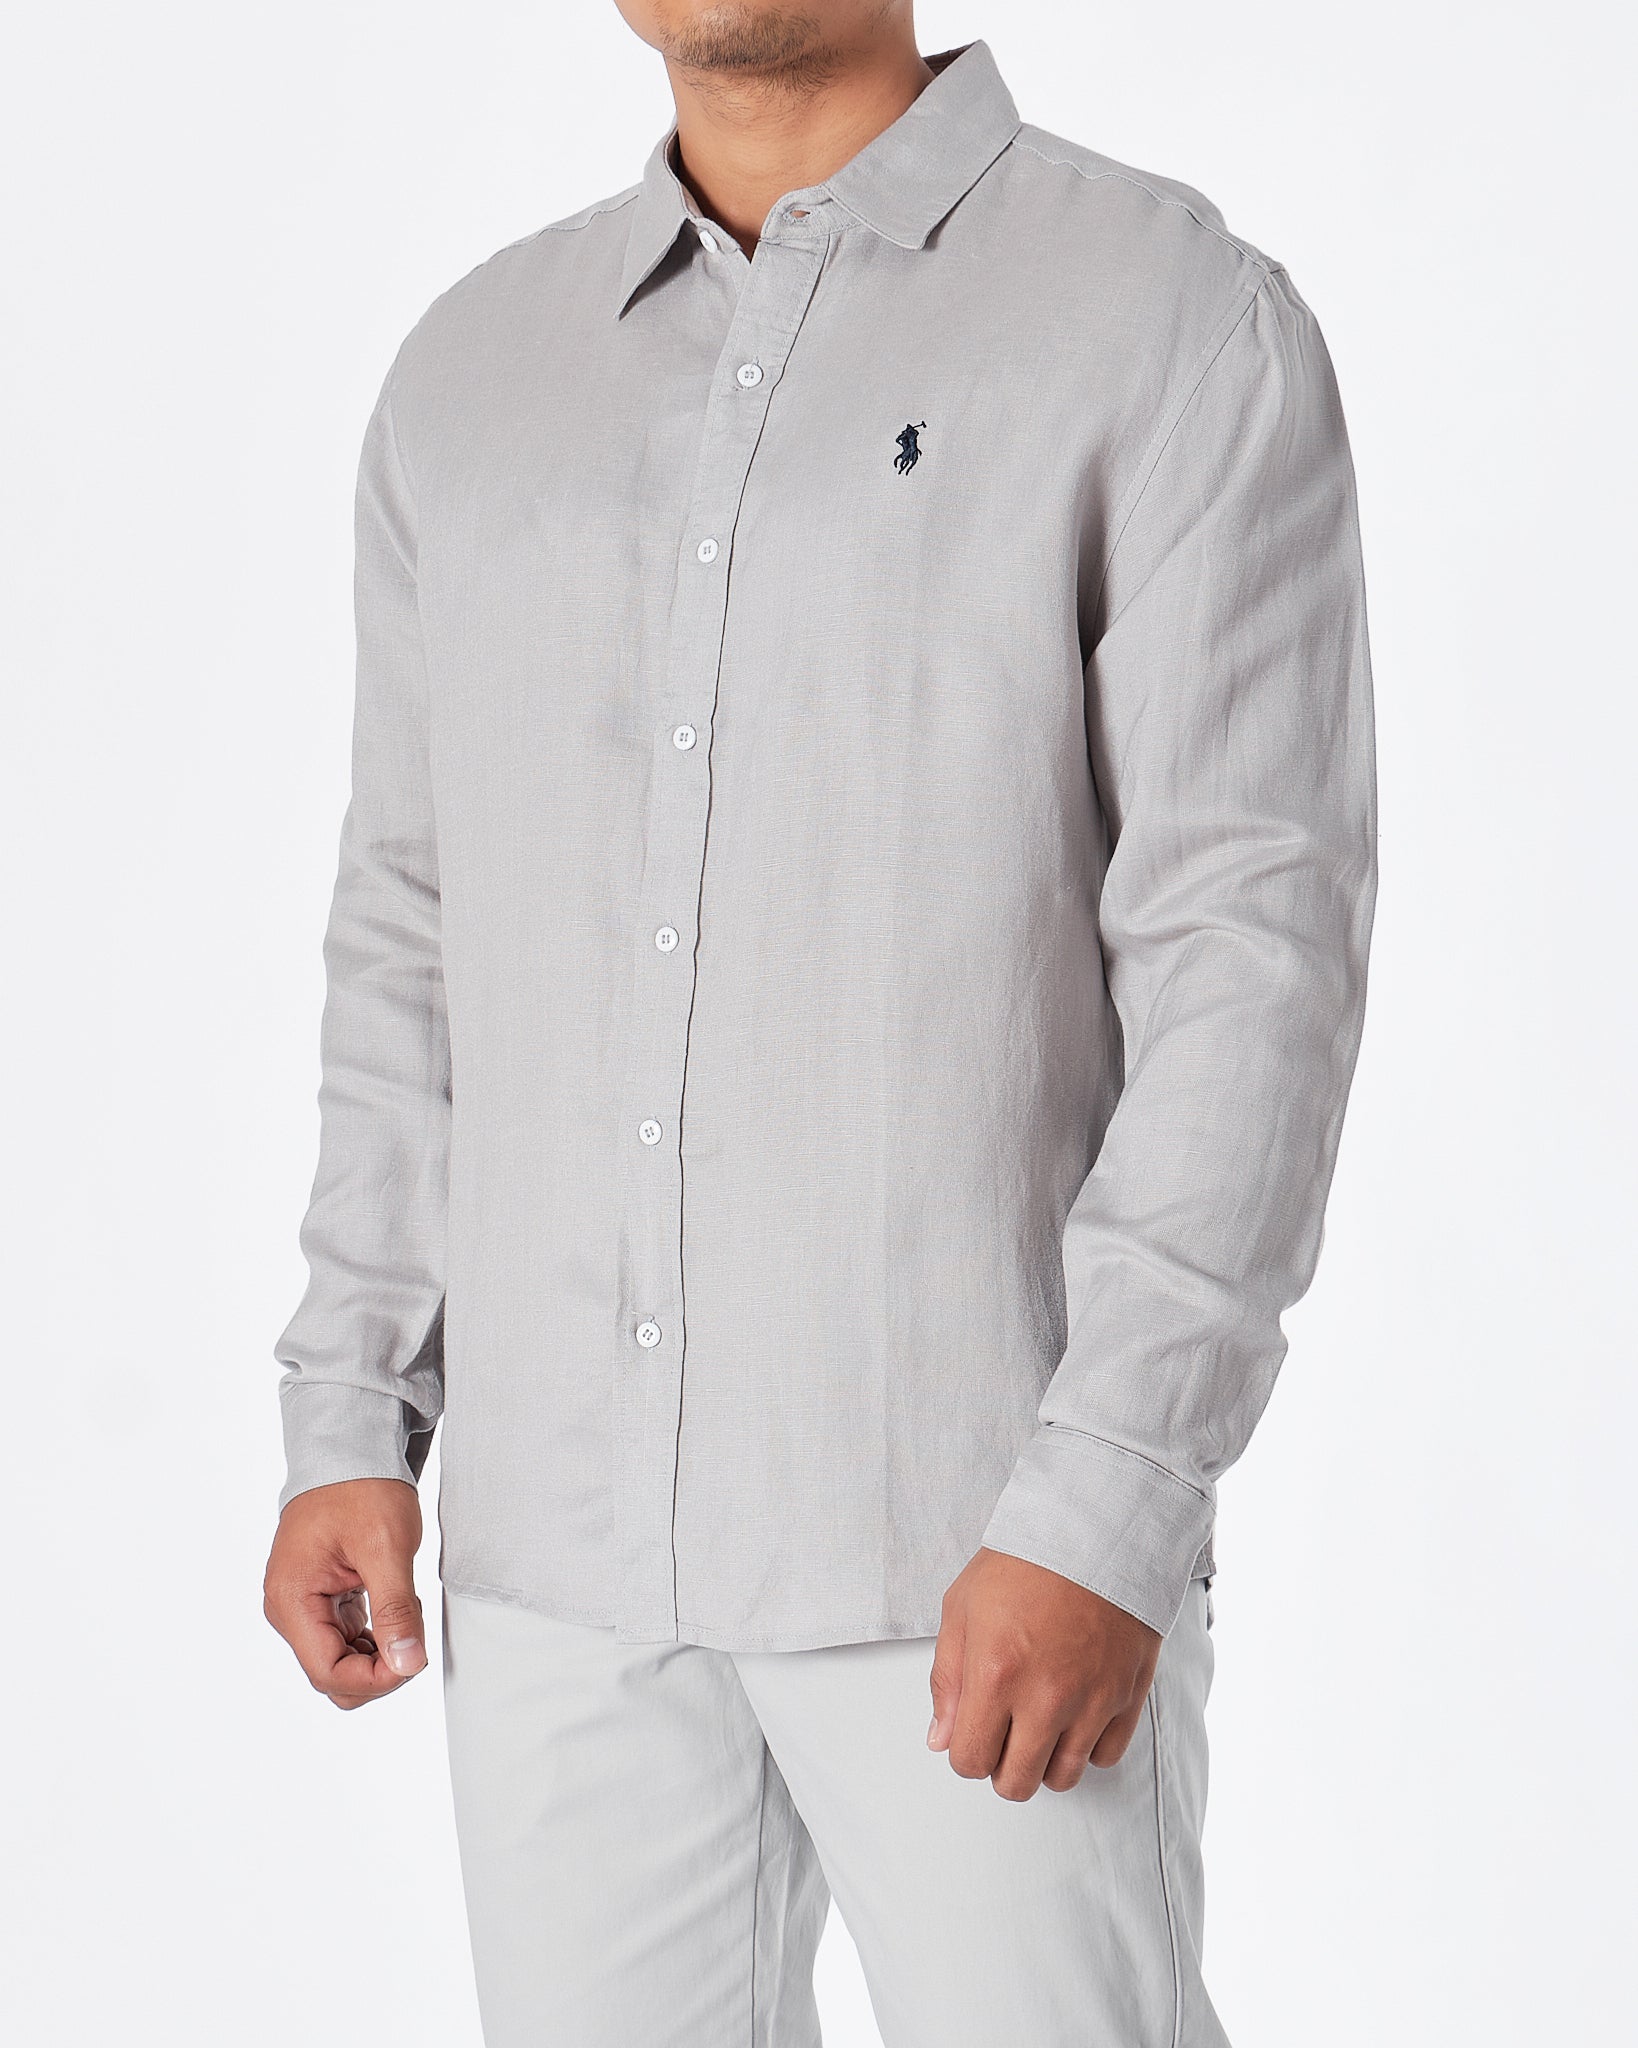 MOI OUTFIT-RL Cotton Men Grey Shirts Long Sleeve 30.90